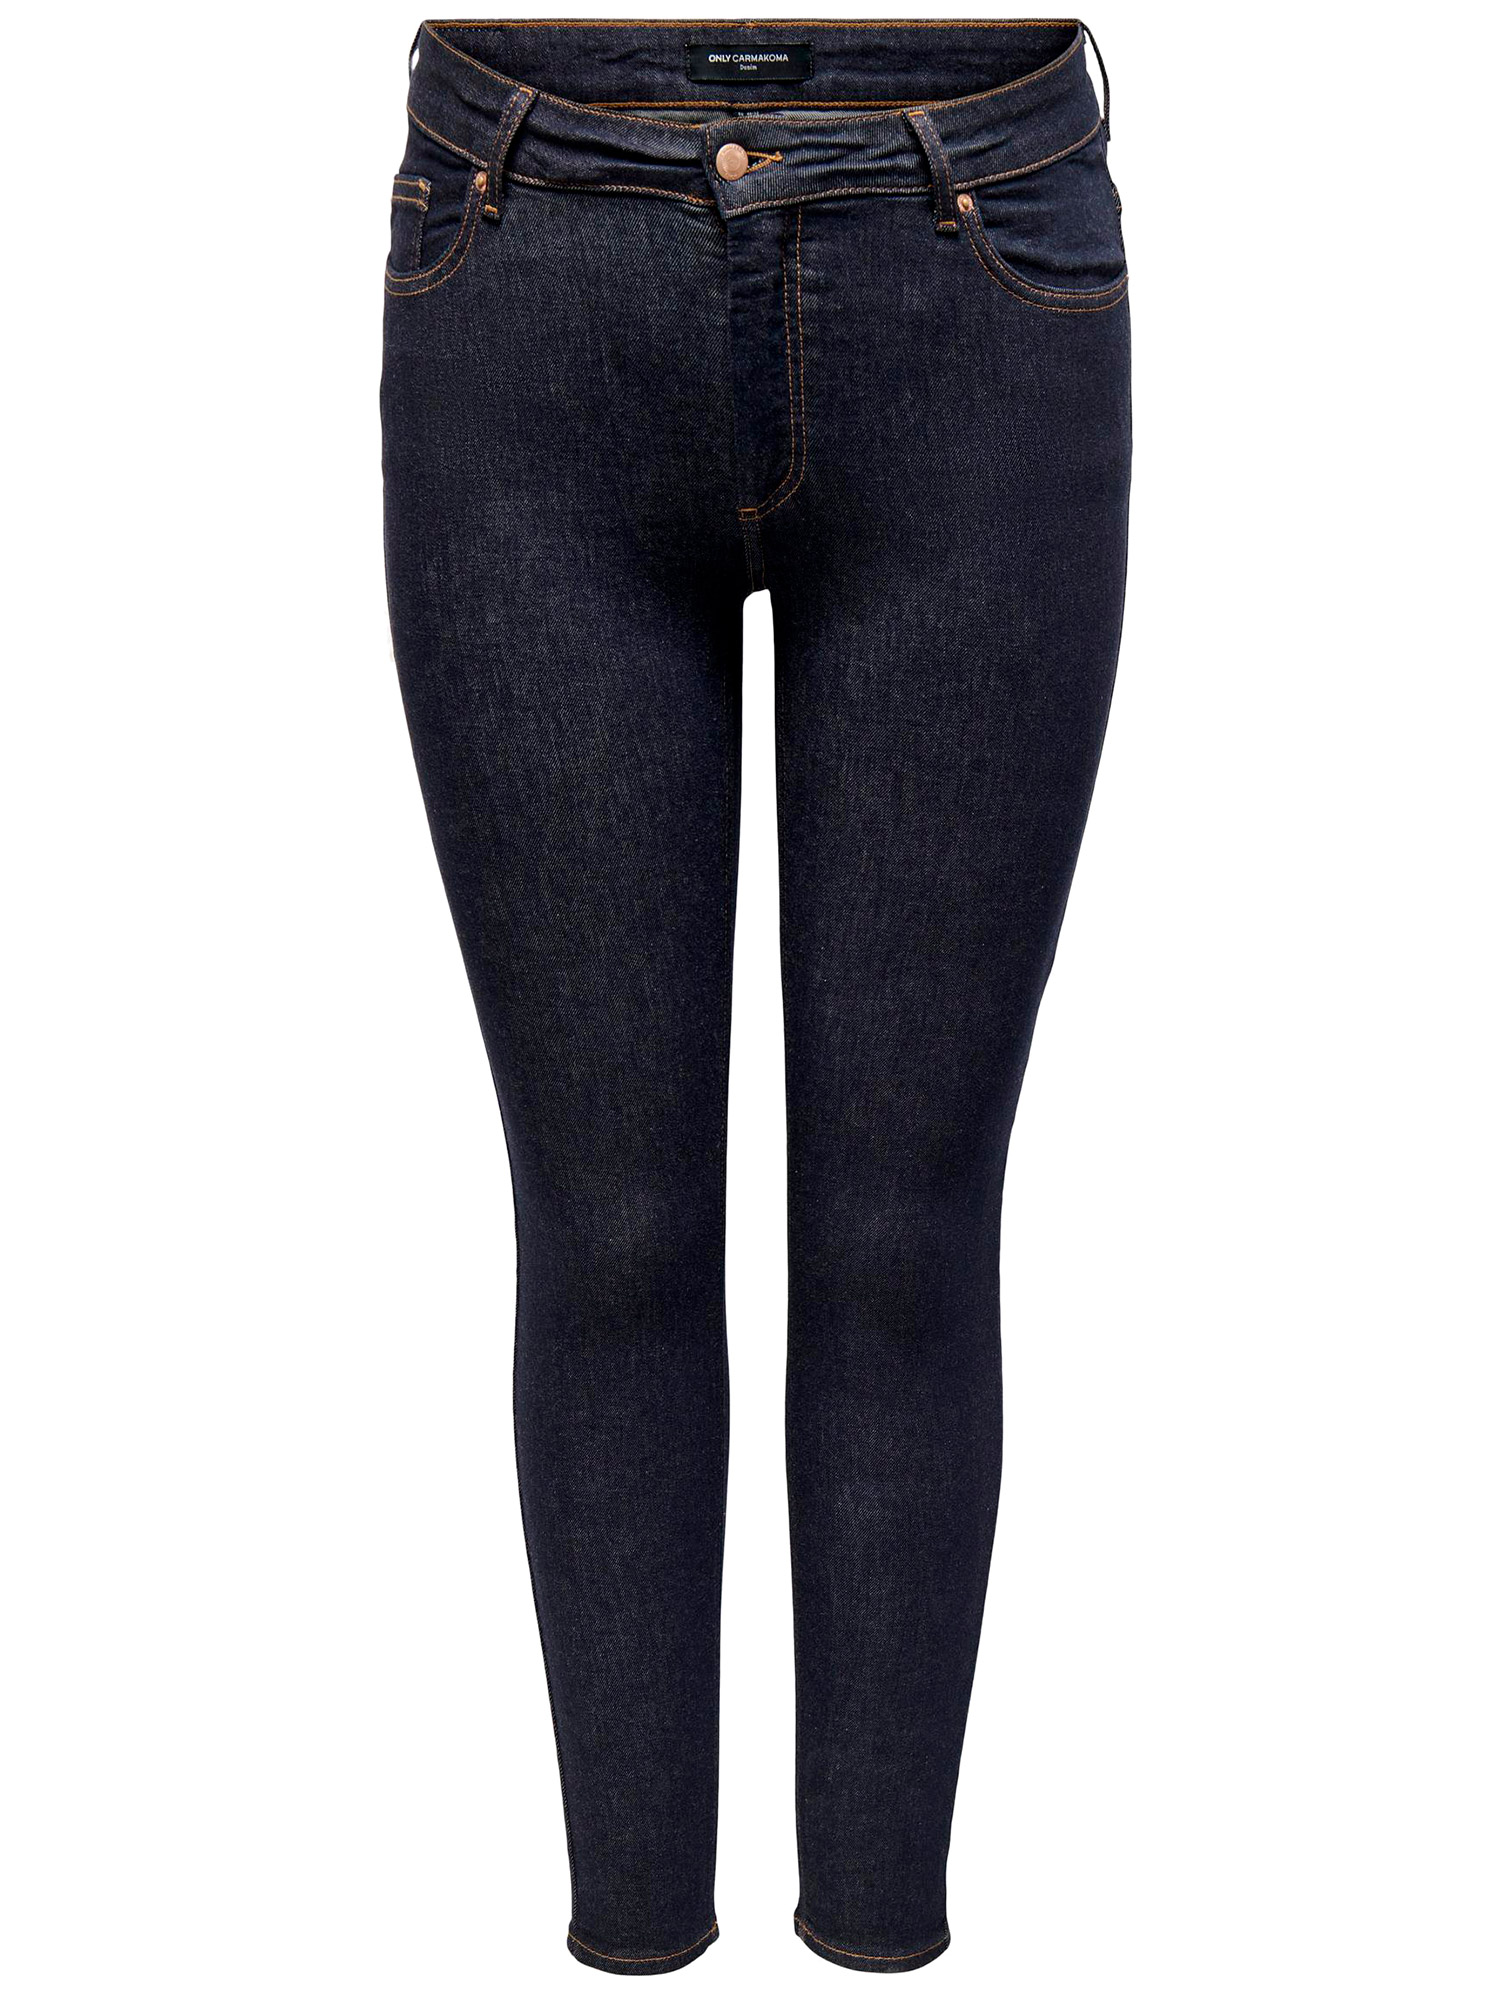 WILLY - Mørkeblå jeans med stretch fra Only Carmakoma